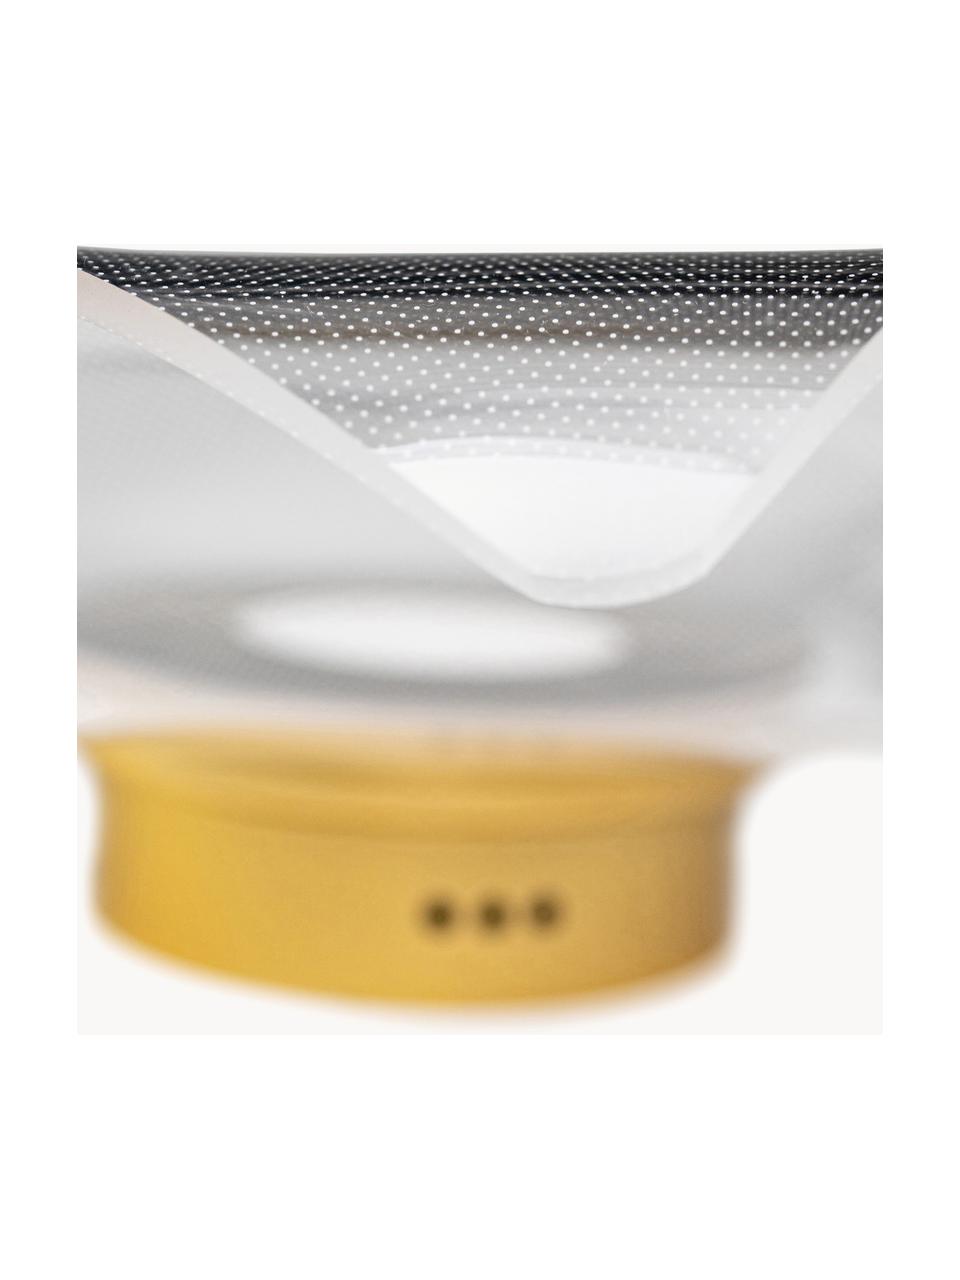 Plafón LED Velo, Pantalla: vidrio acrílico, Anclaje: metal anodizado, Dorado, transparente, Ø 50 x Al 20 cm